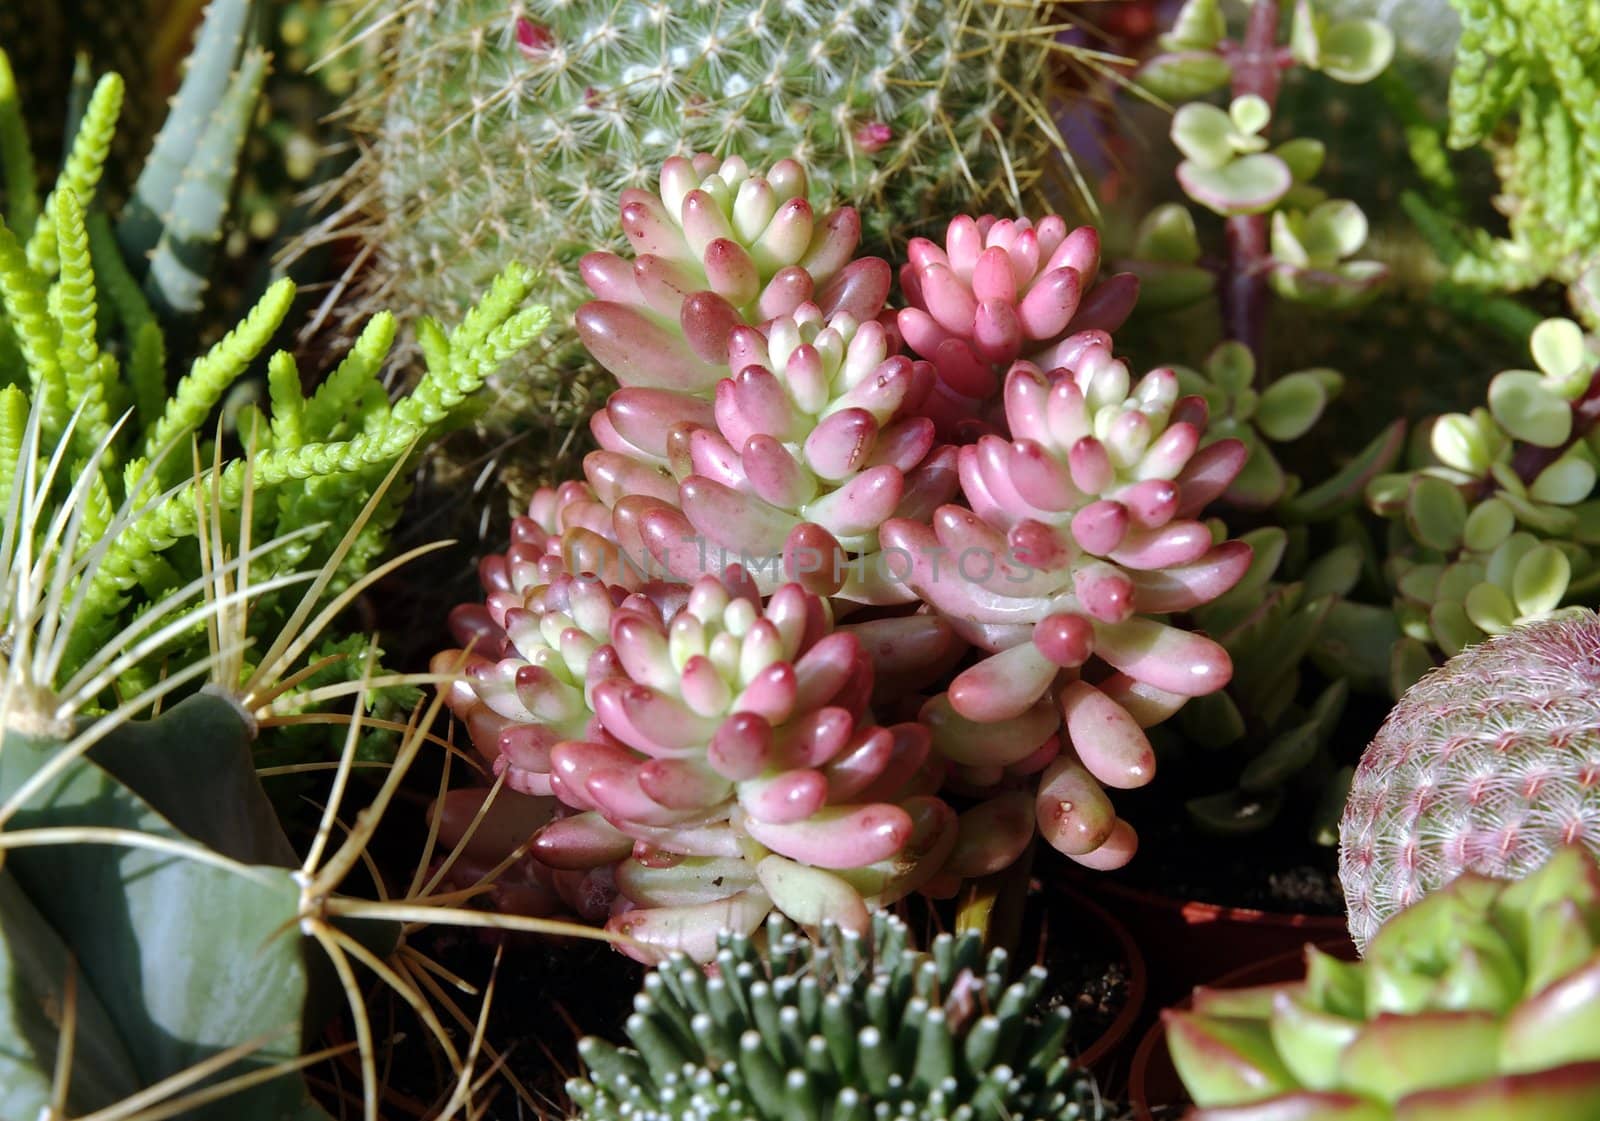 Breeding cactus by FotoFrank